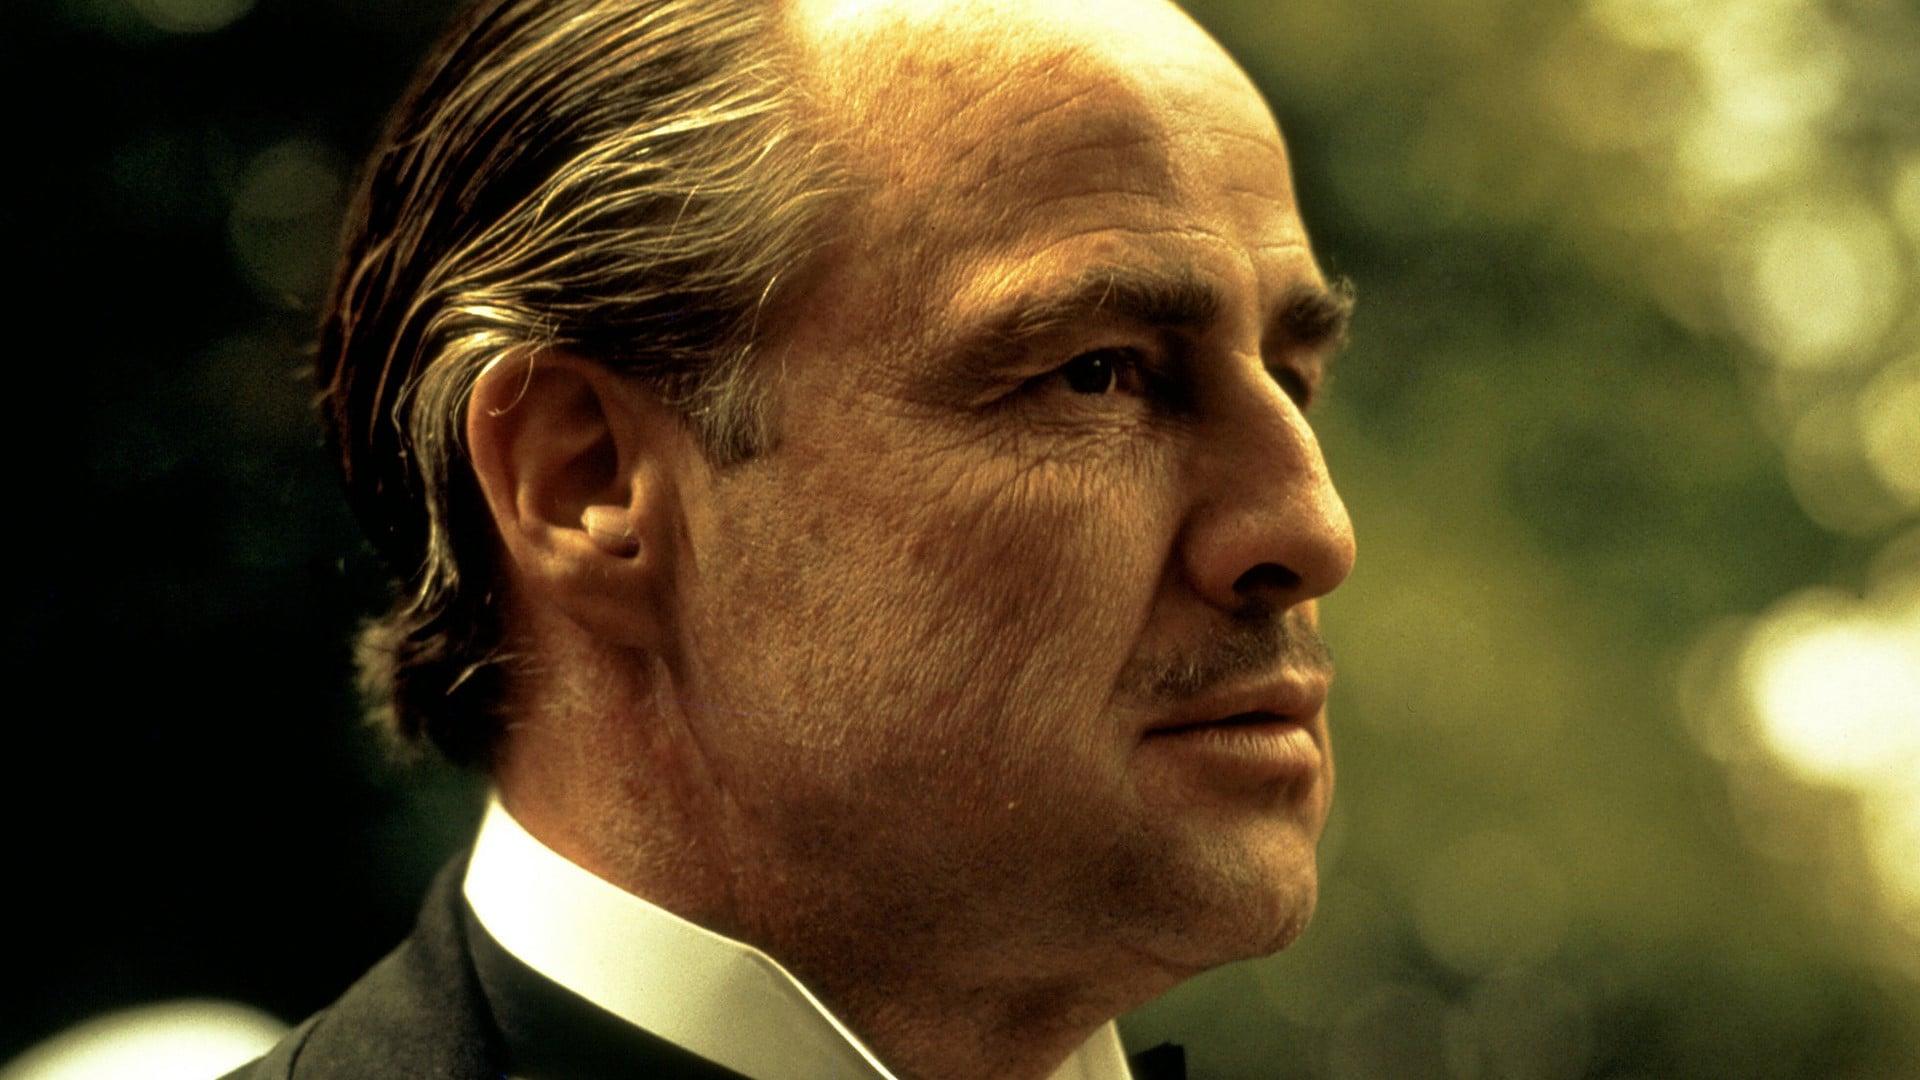 سلسلة The Godfather - مارلون براندو في دور فيتو كورليوني